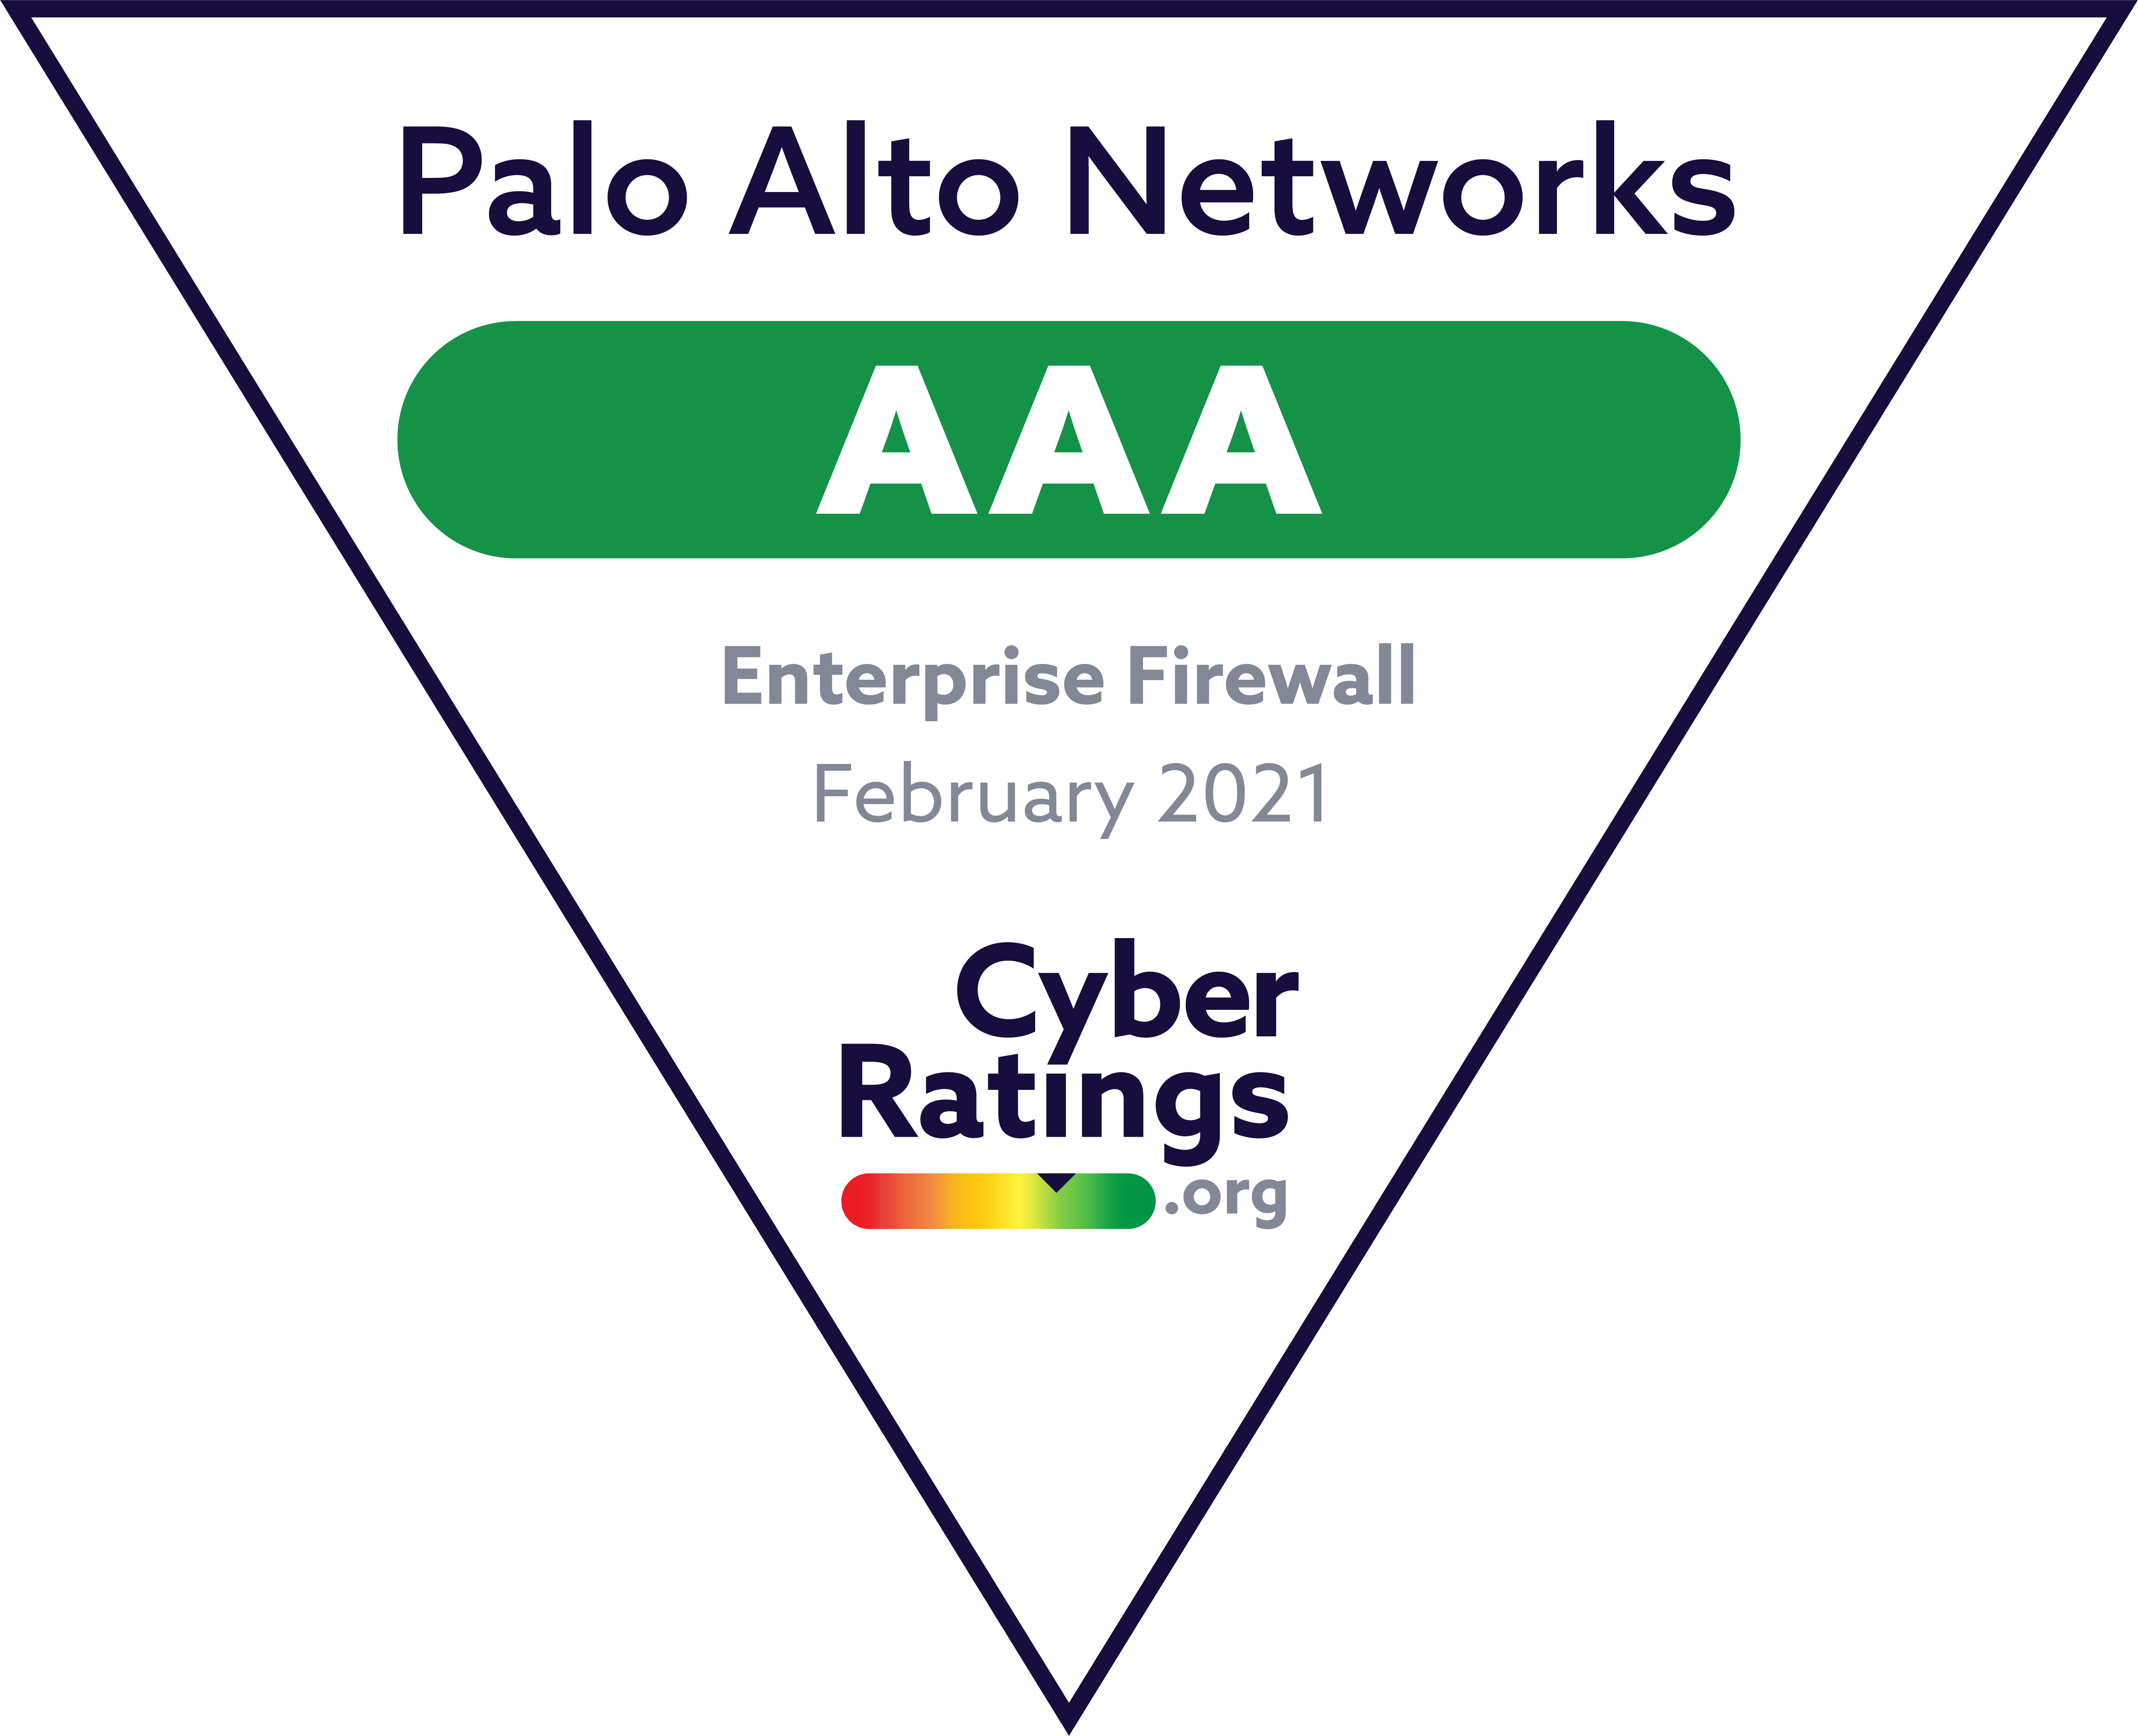 Palo Alto Networks AAA Enterprise Firewall February 2021 CyberRatings.org